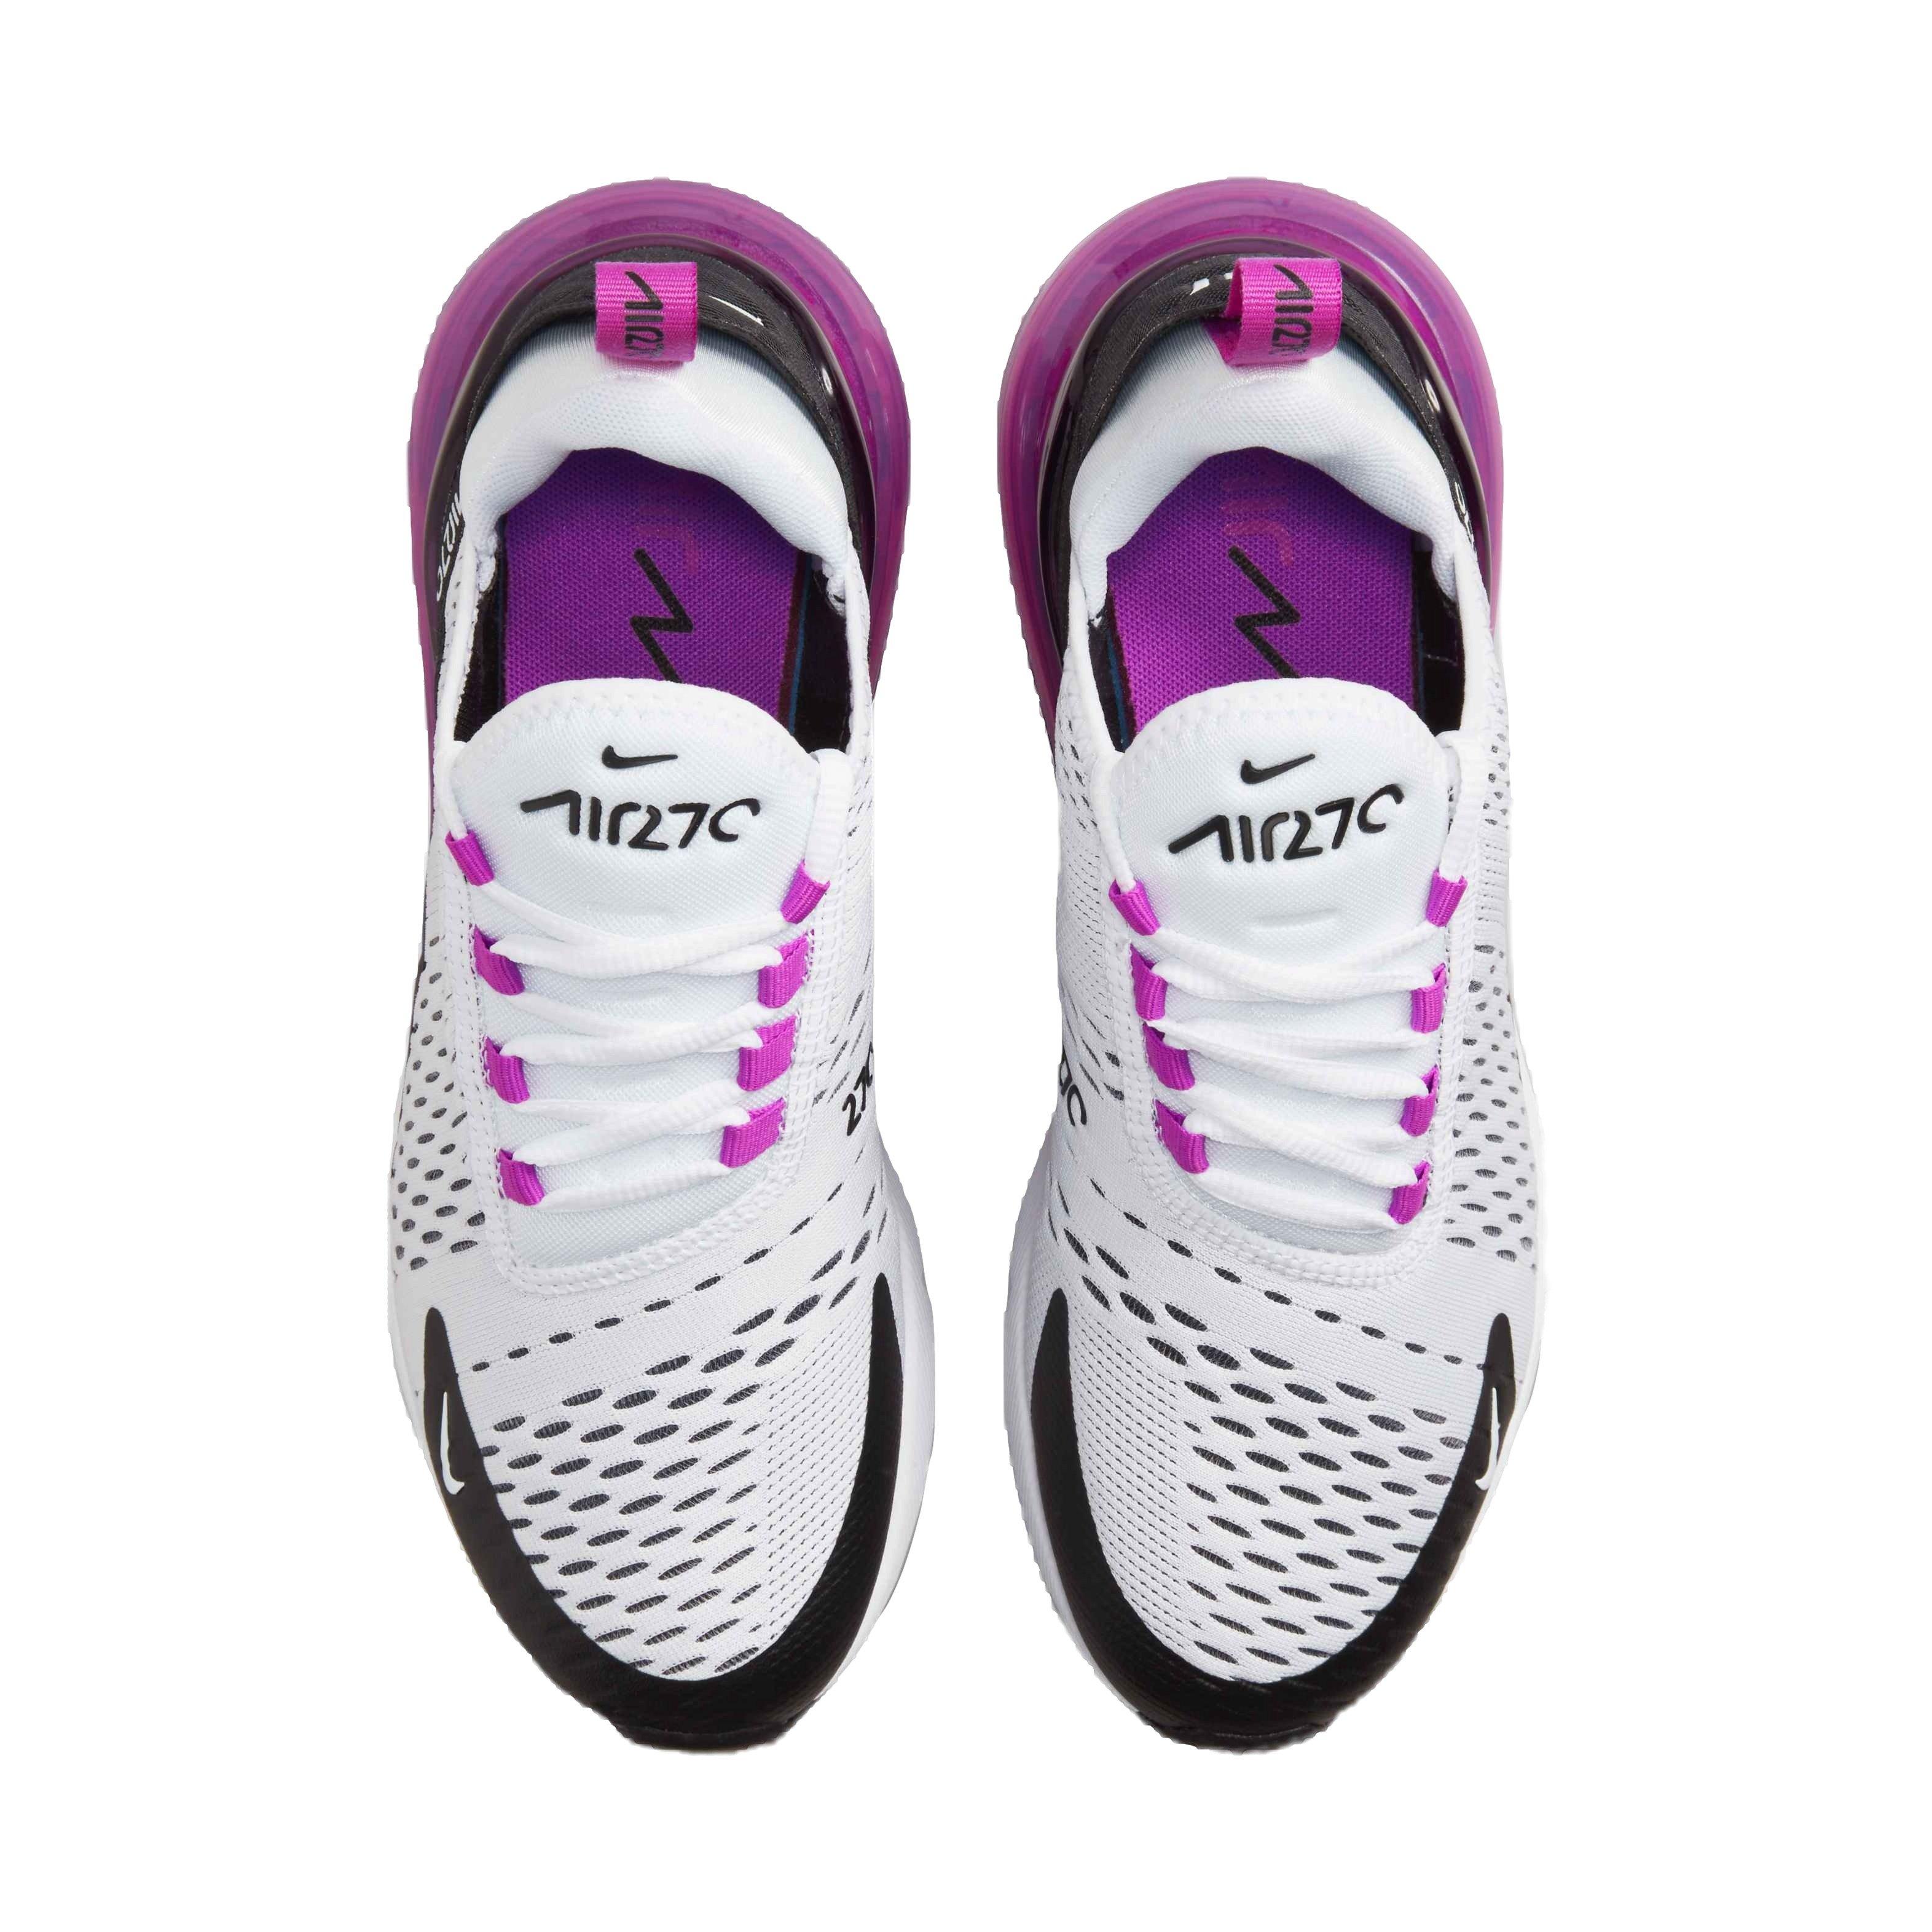 Bandido Voluntario Credencial Nike Air Max 270 "White/Black/Fuchsia Dream" Women's Shoe